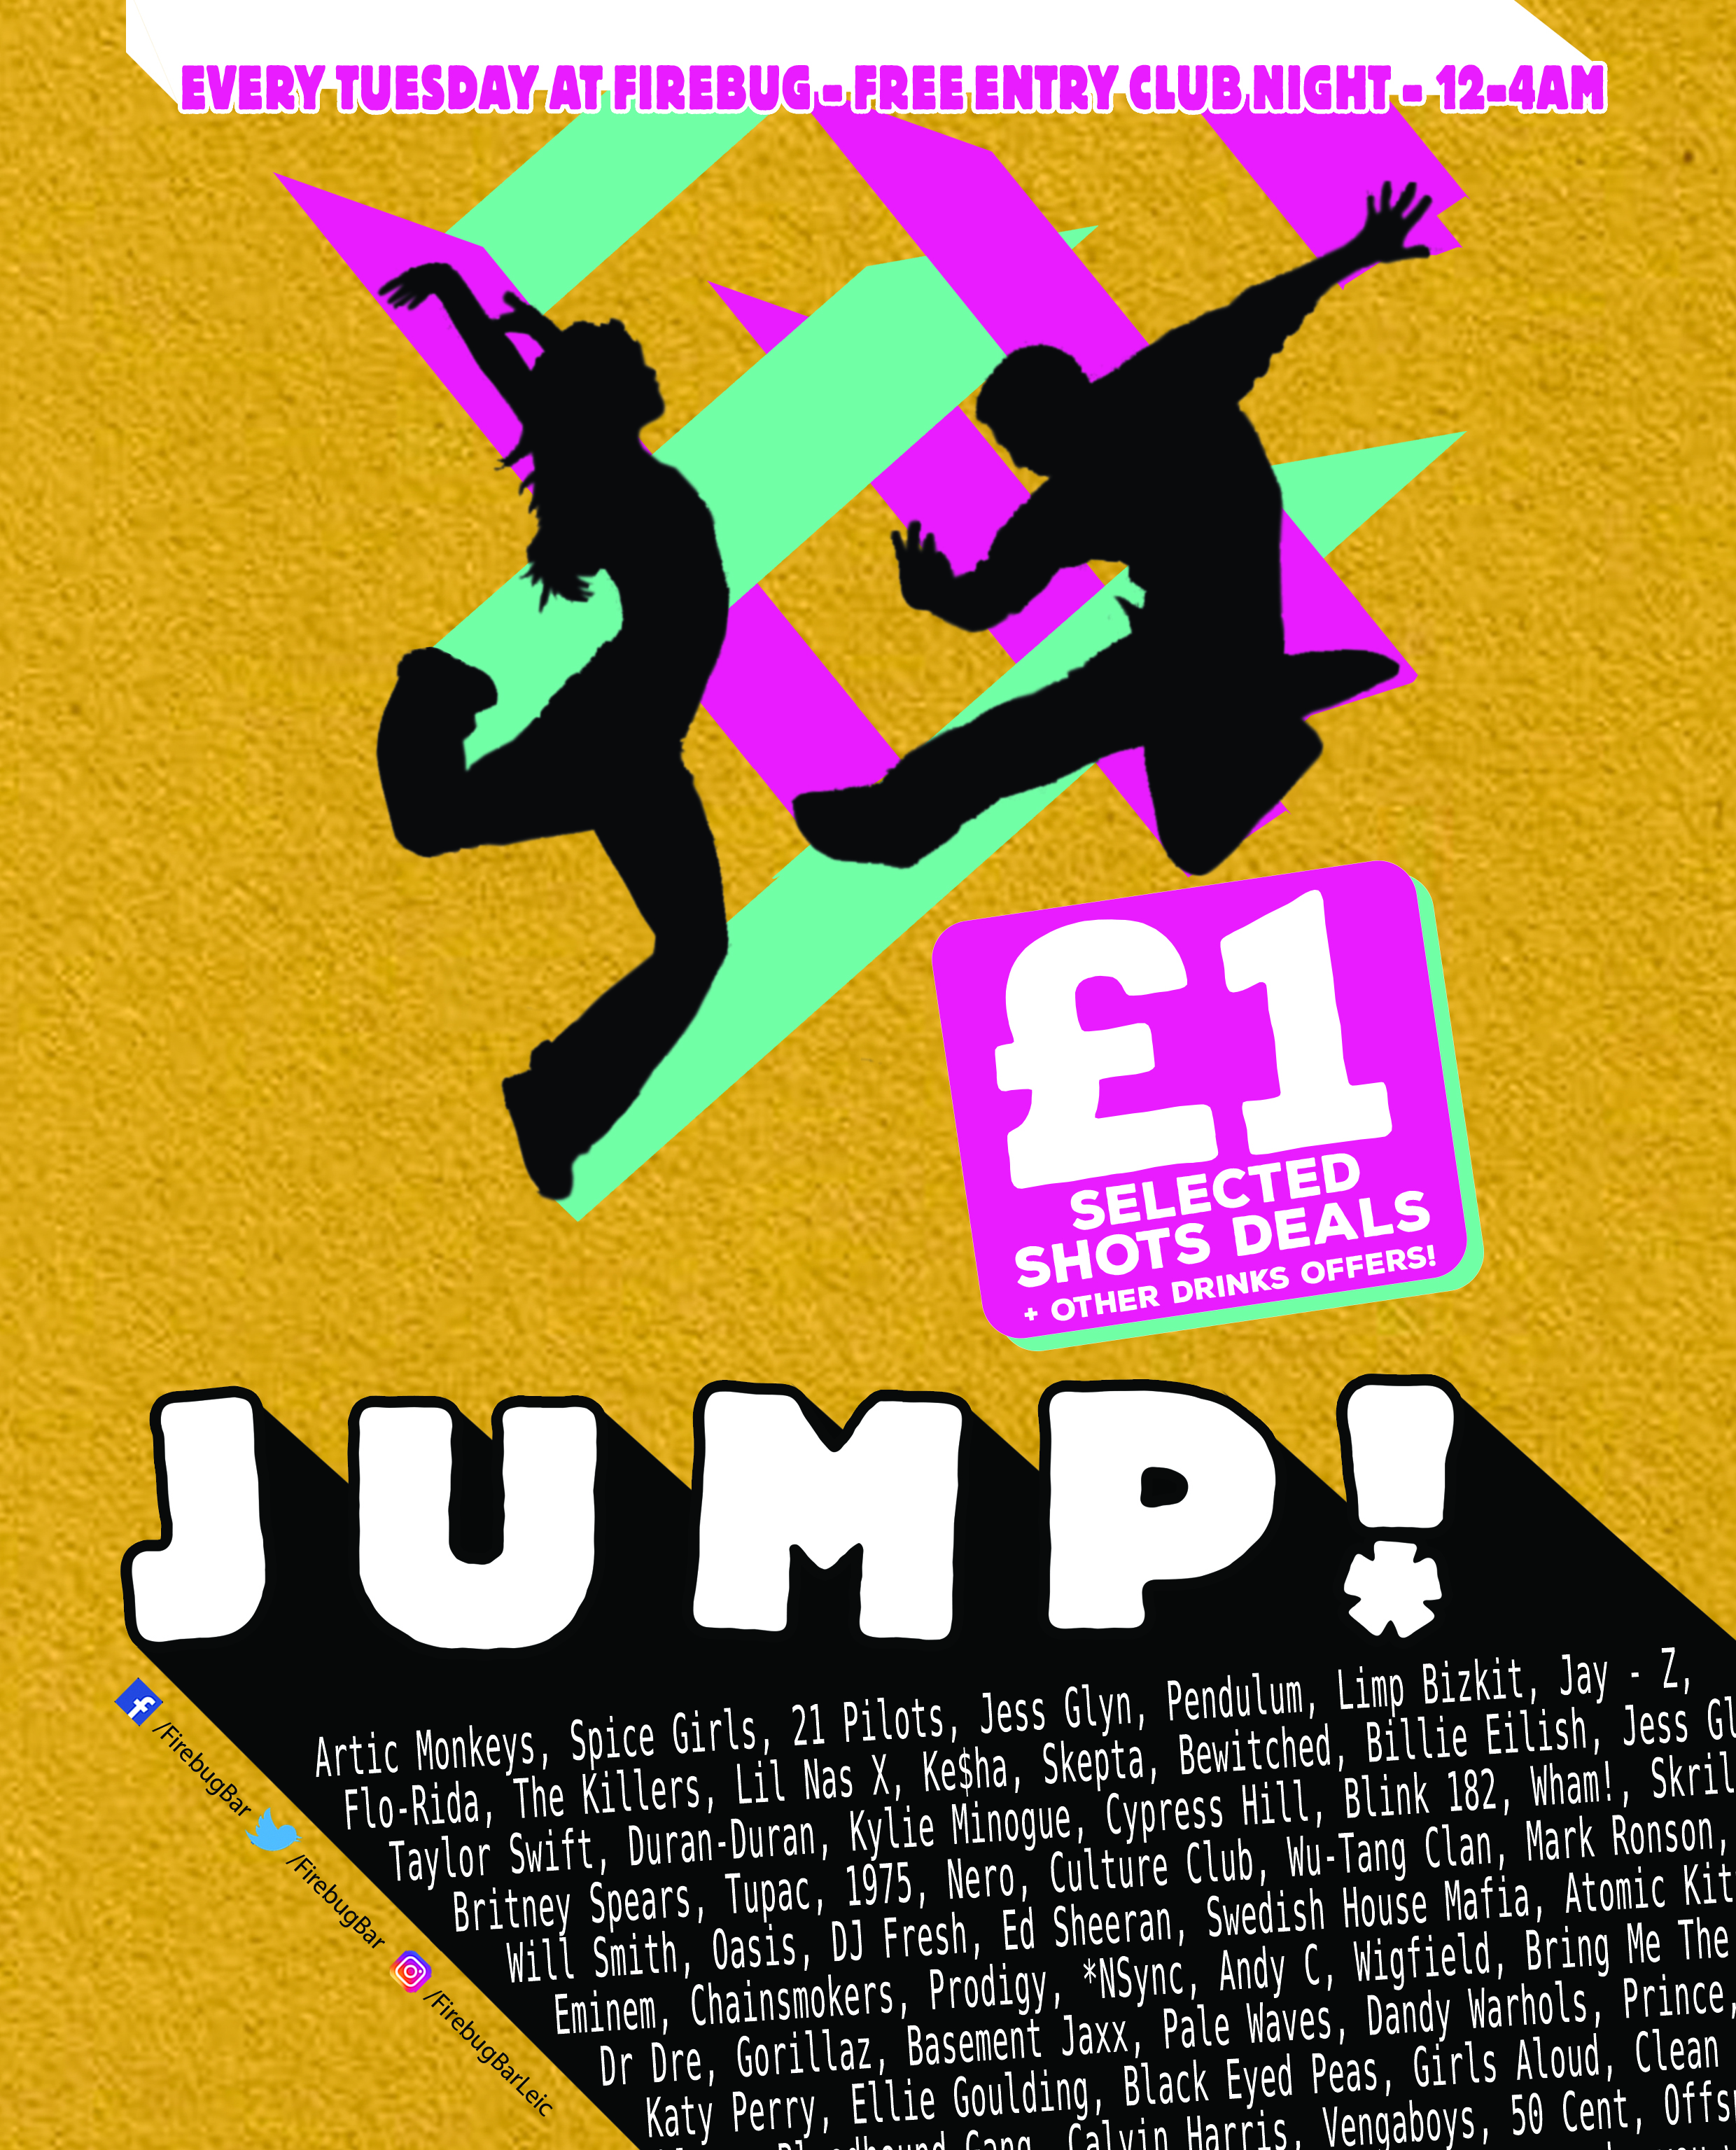 JUMP! Club Night Every Tuesday Night upstairs!